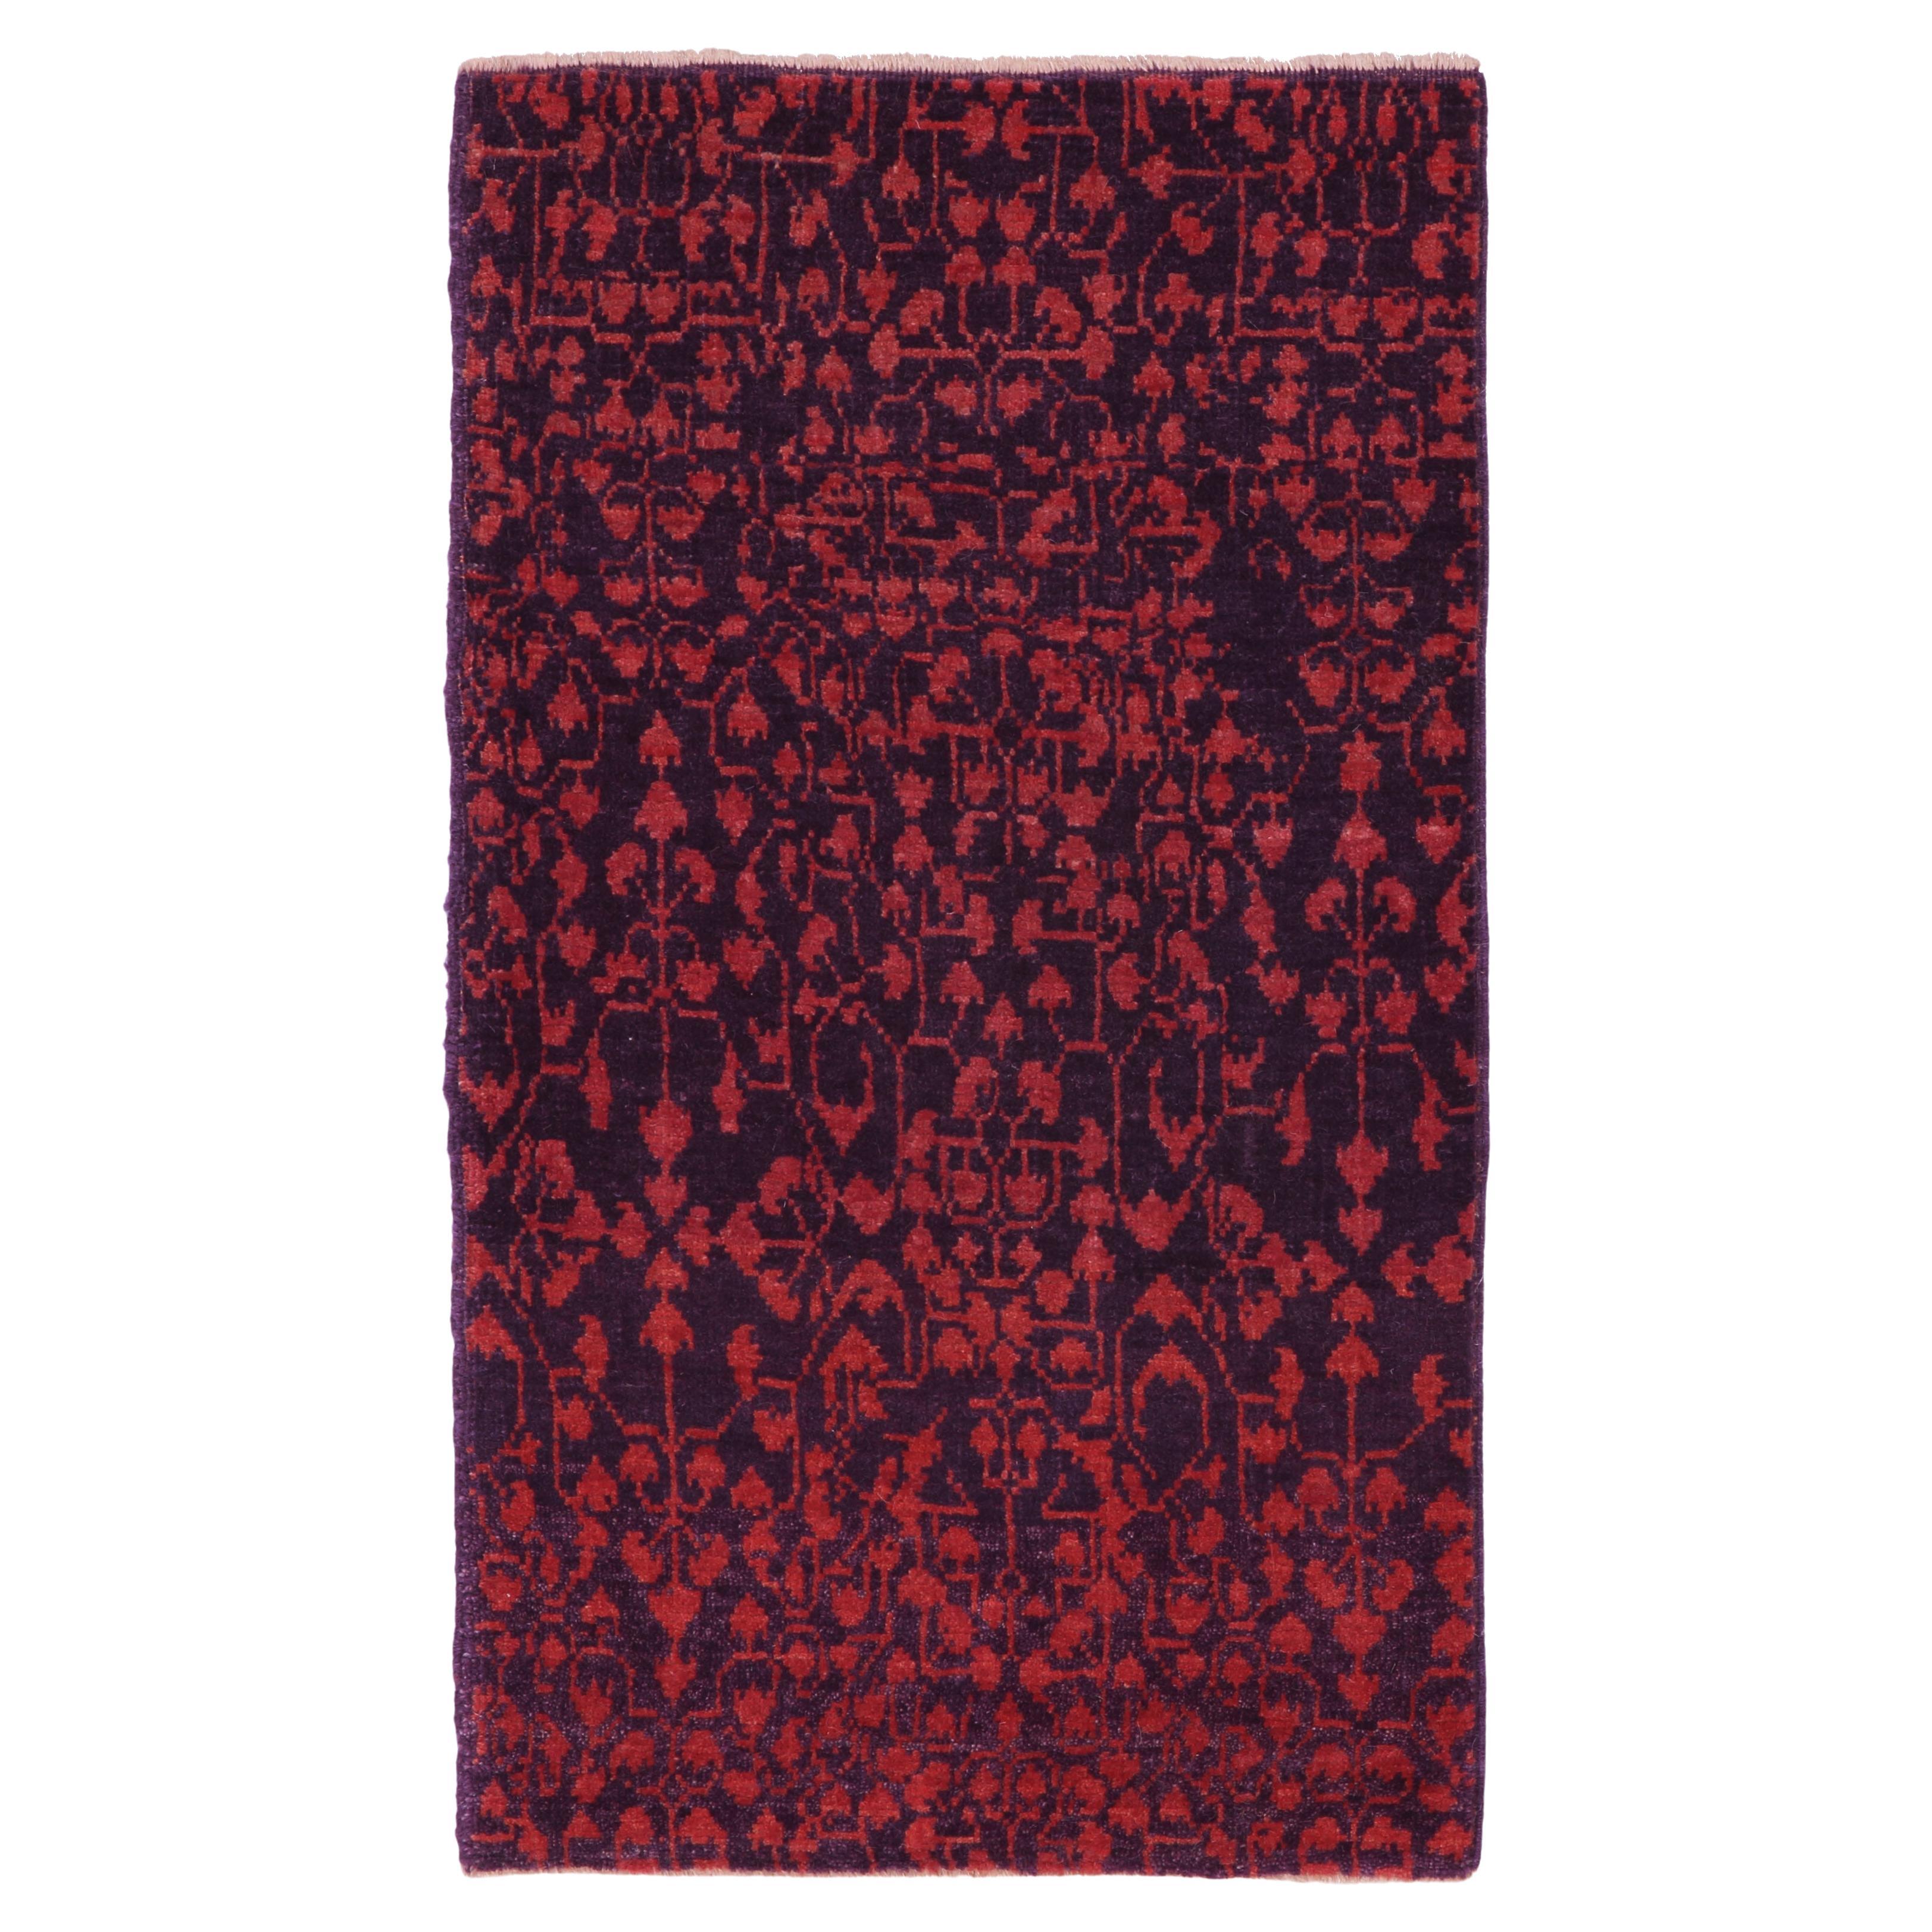 Ararat Rugs Mamluk Wagireh Rug with Leaf Lattice Design, Egypt Revival Carpet